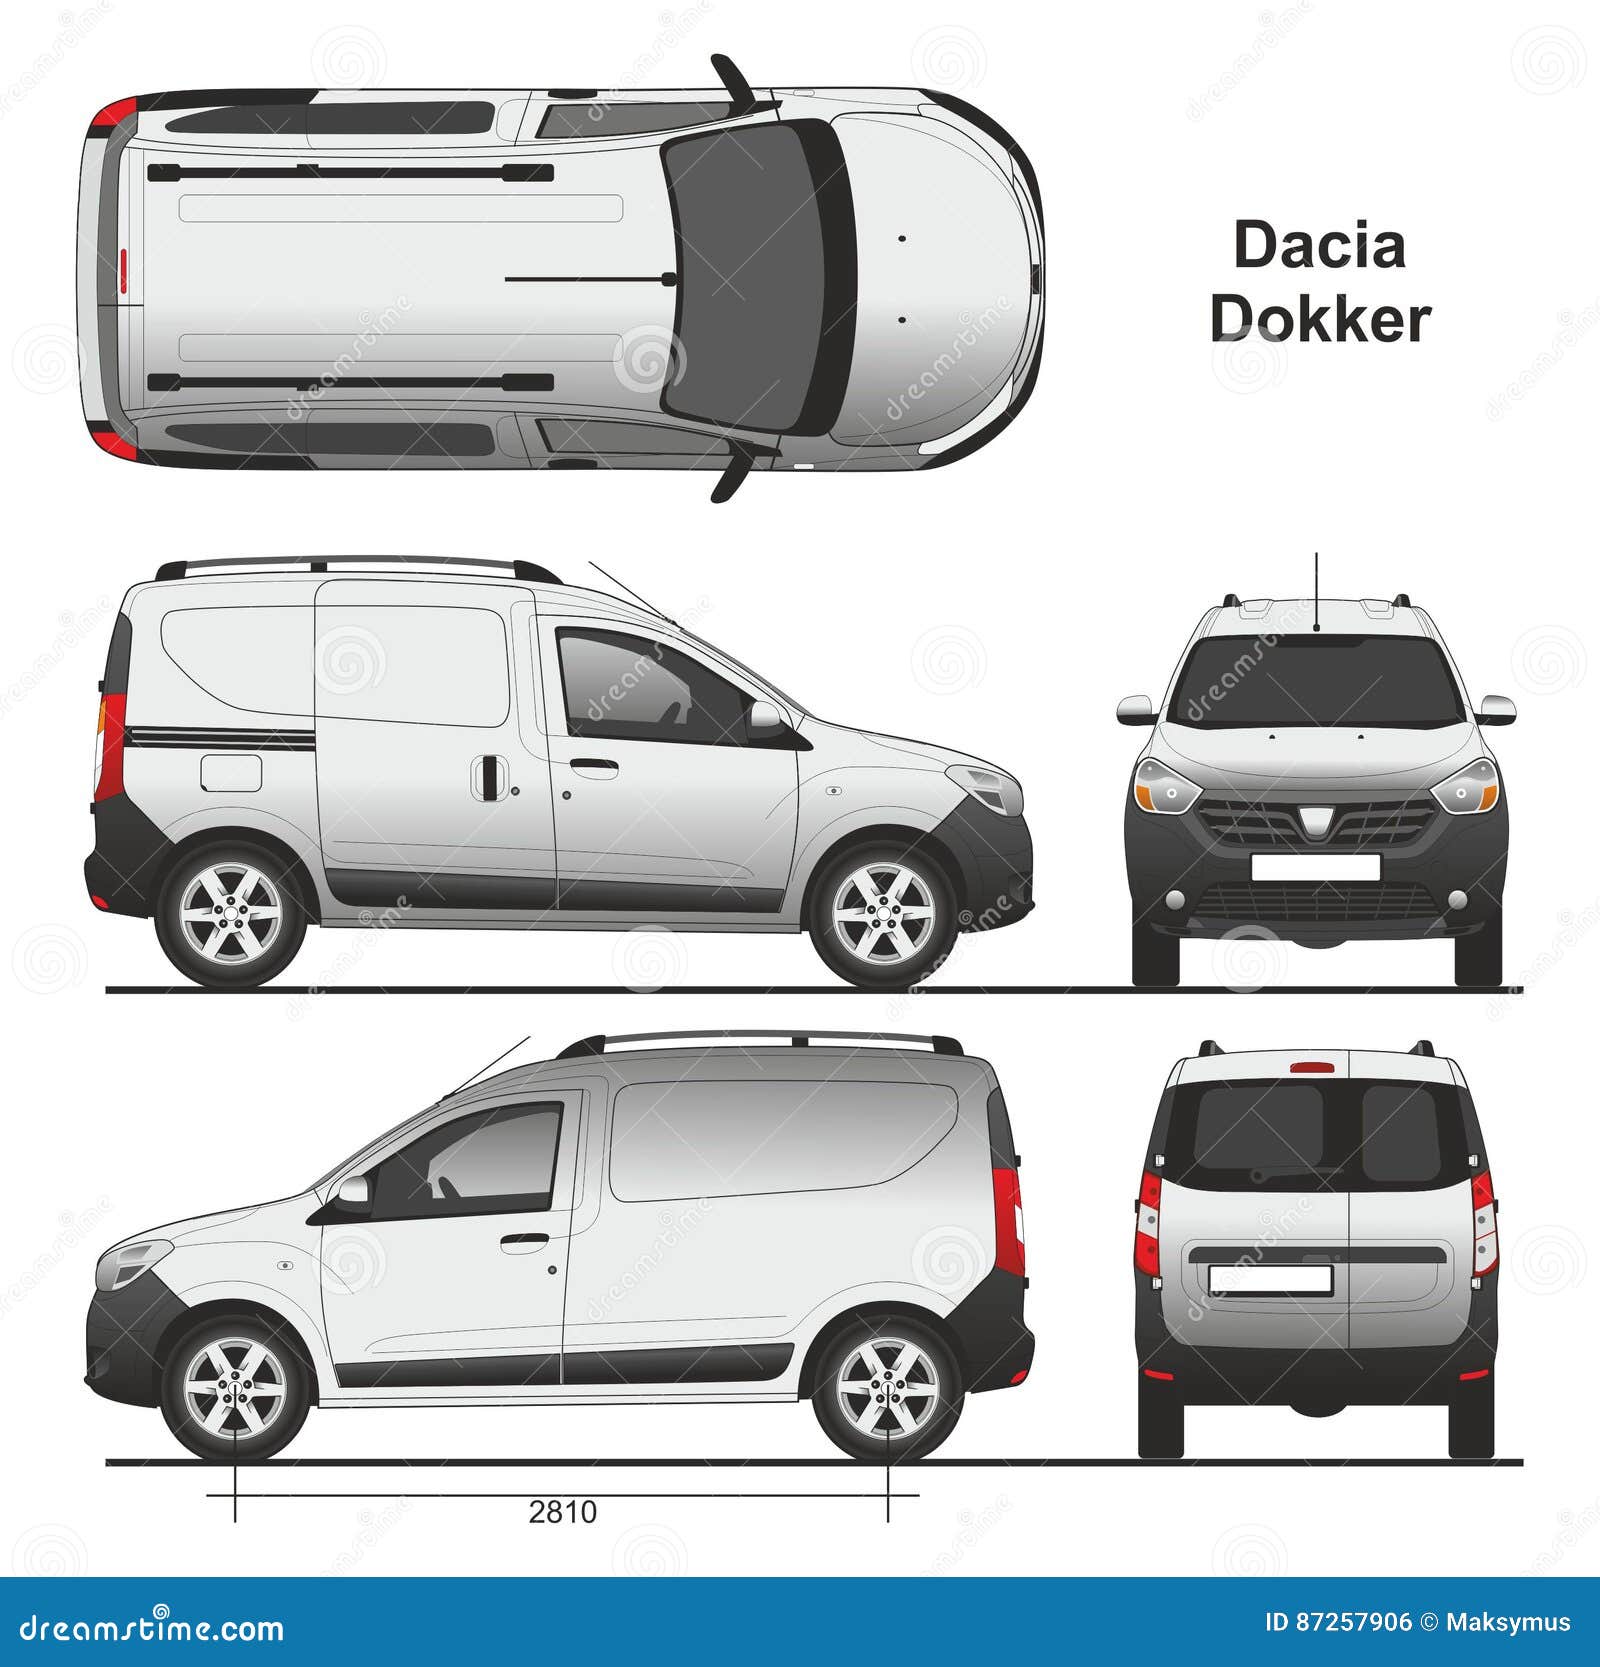 Dacia Dokker Stock Photos - Free & Royalty-Free Stock Photos from